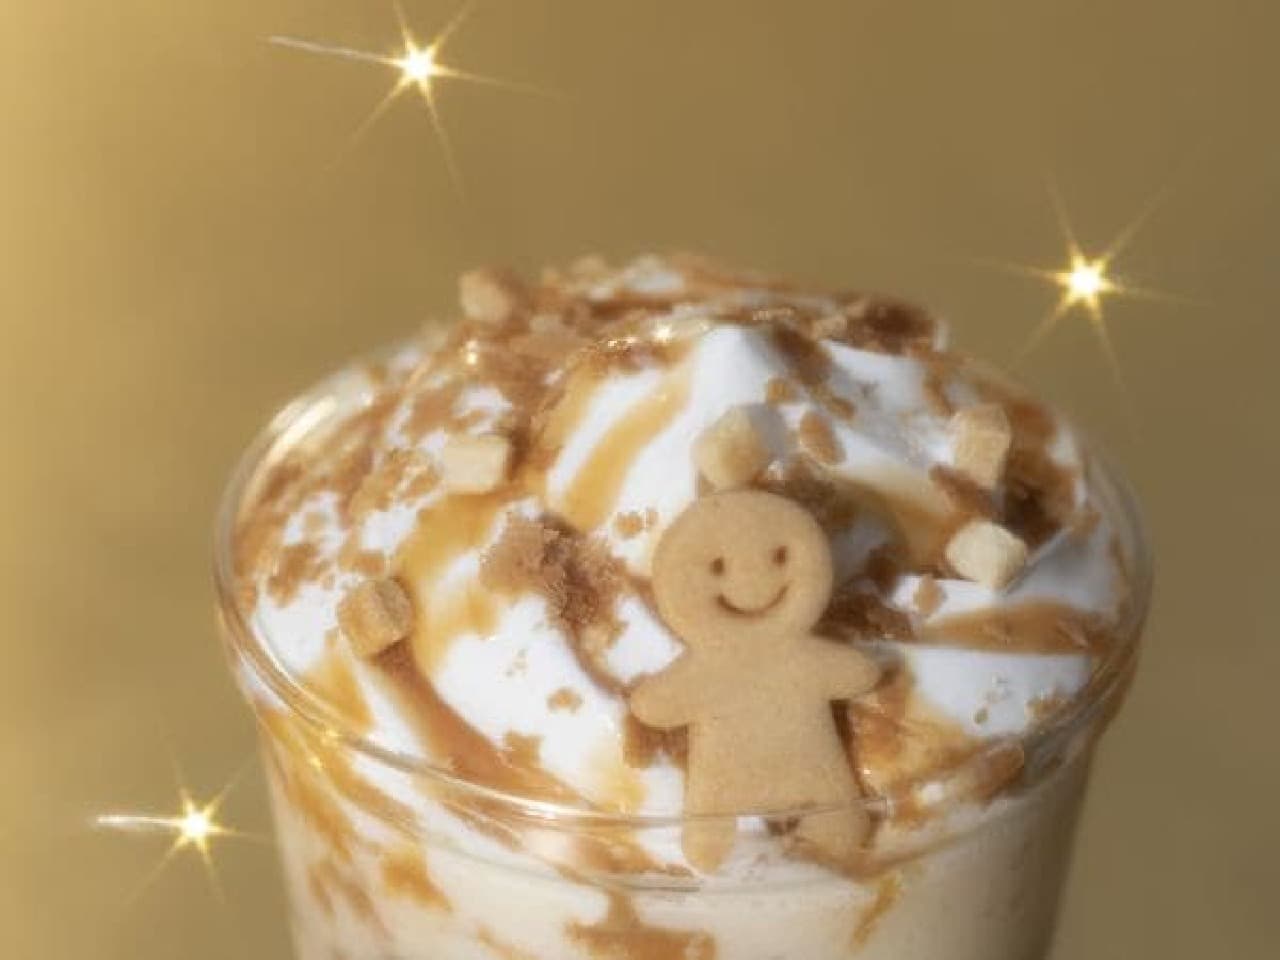 Starbucks "Gingerbread Cookies".